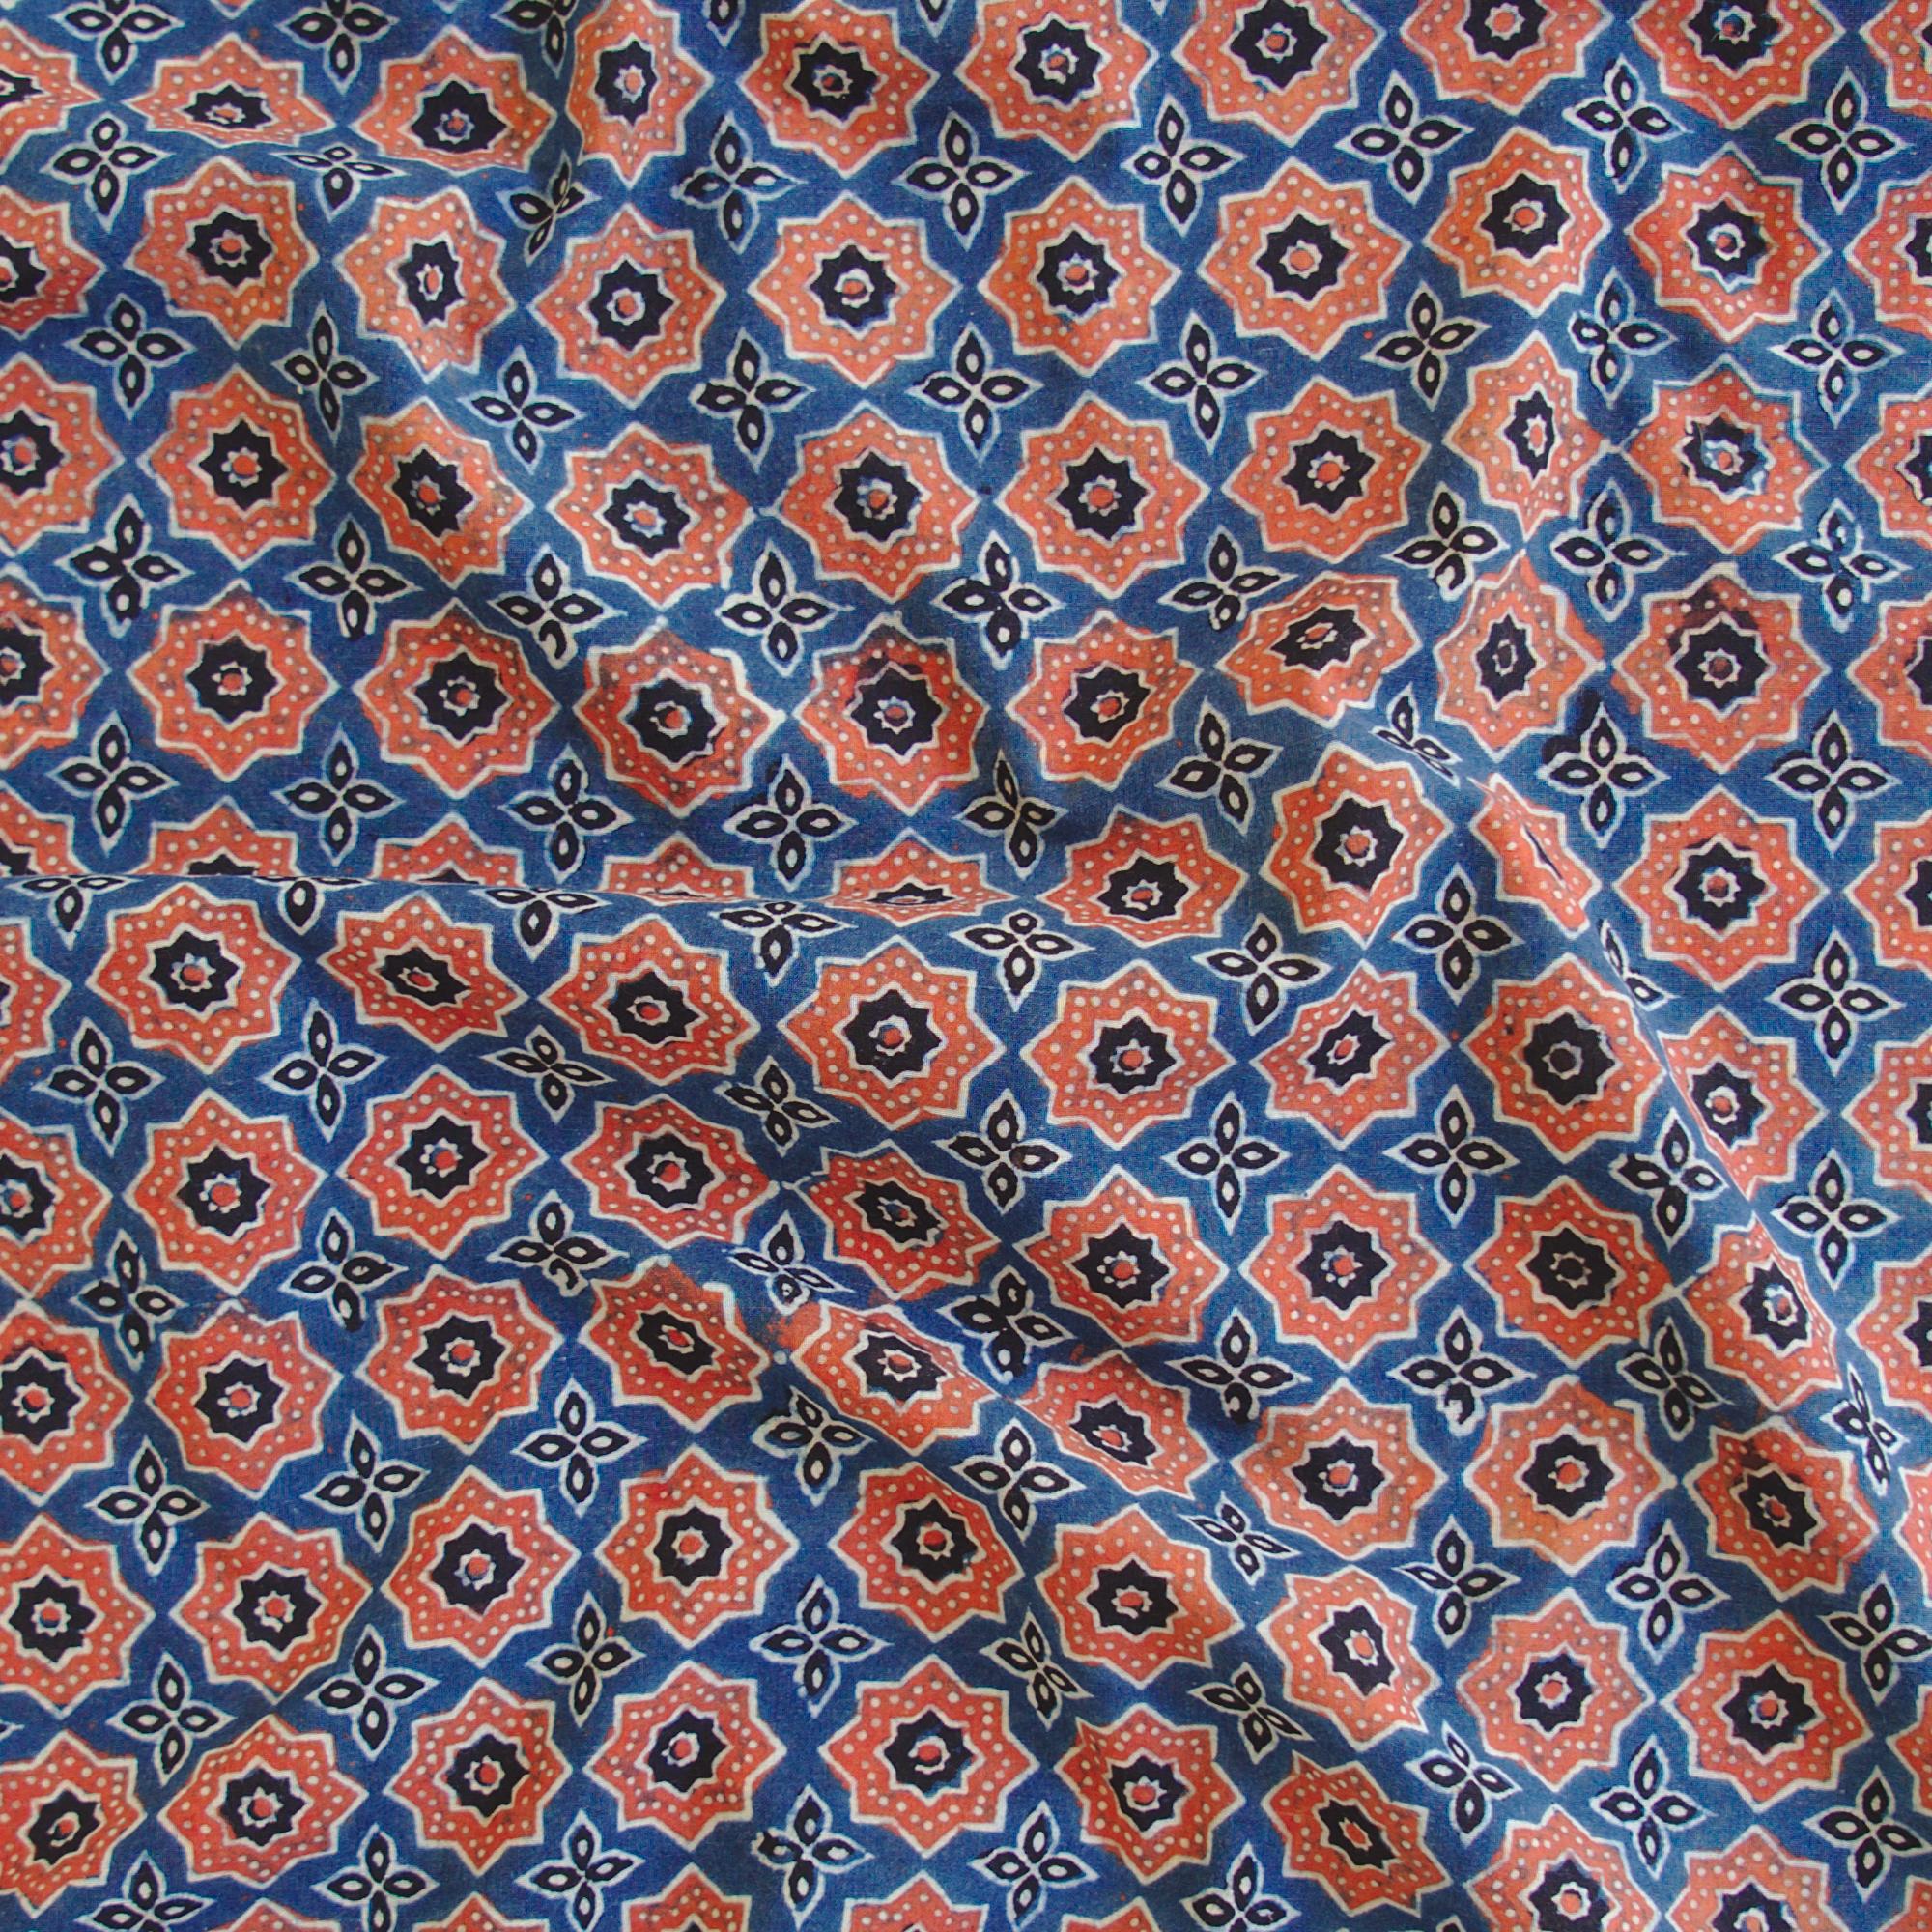 Block Printed Fabric, 100% Cotton, Ajrak Design: Blue Indigo Base, Red Madder Star. Contrast